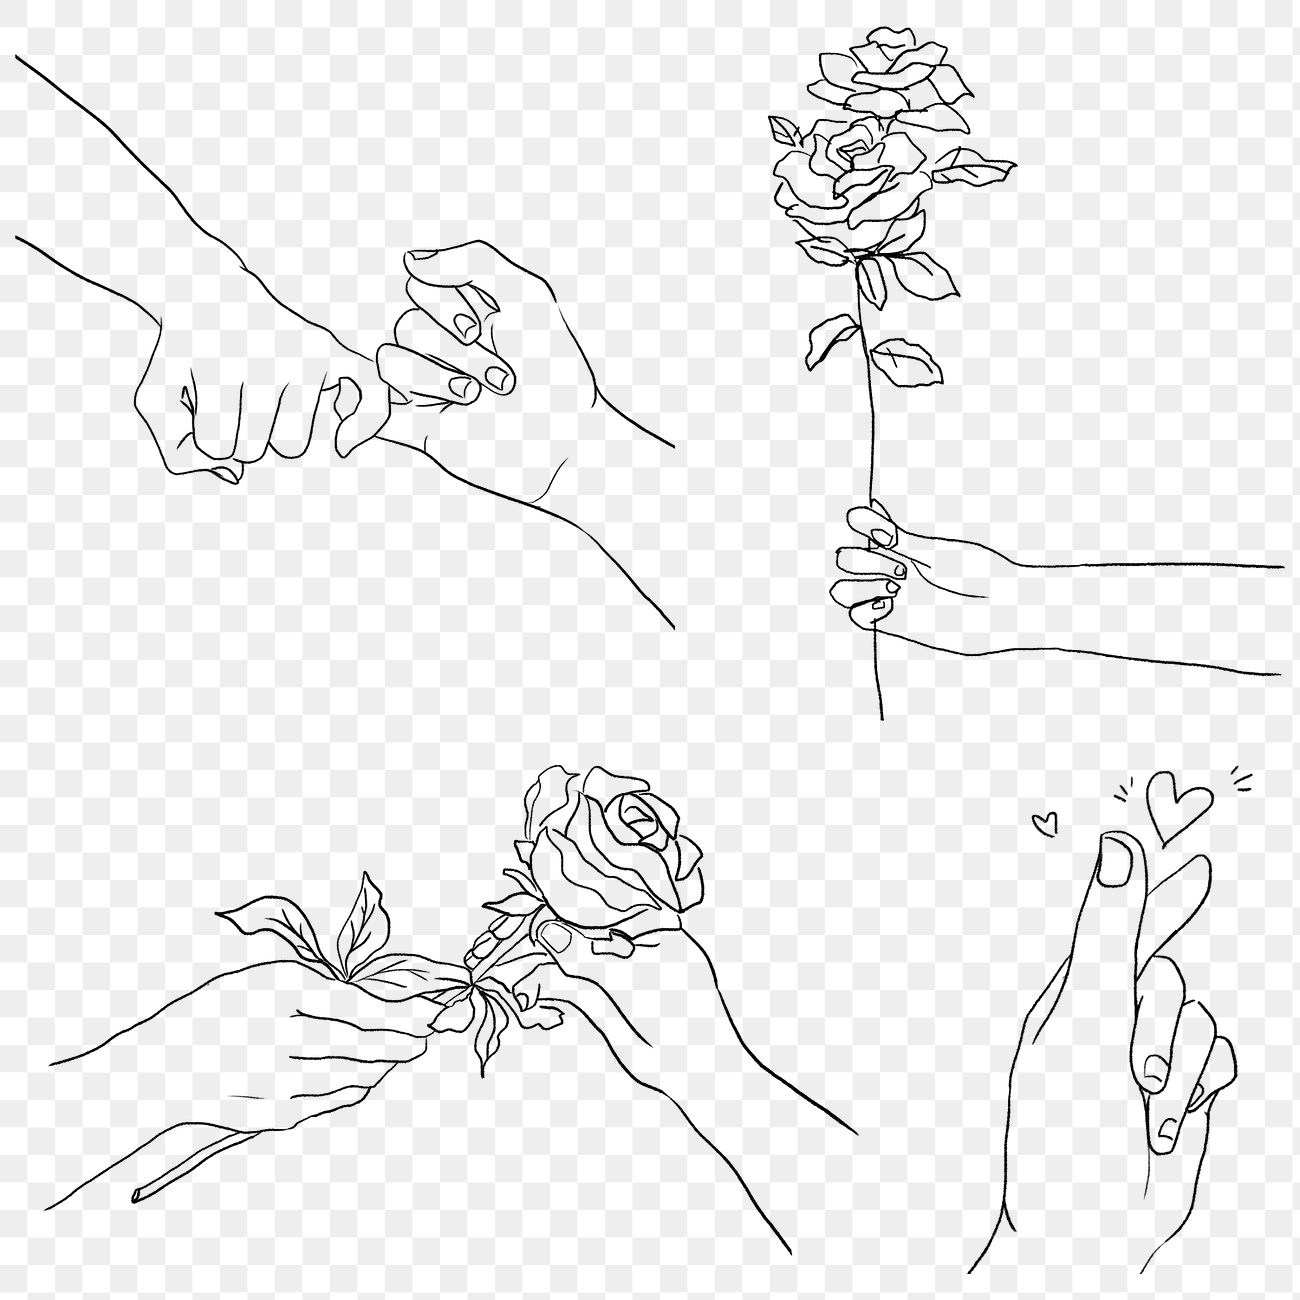 Romantic hand gestures png for Valentine’s | Premium PNG - rawpixel